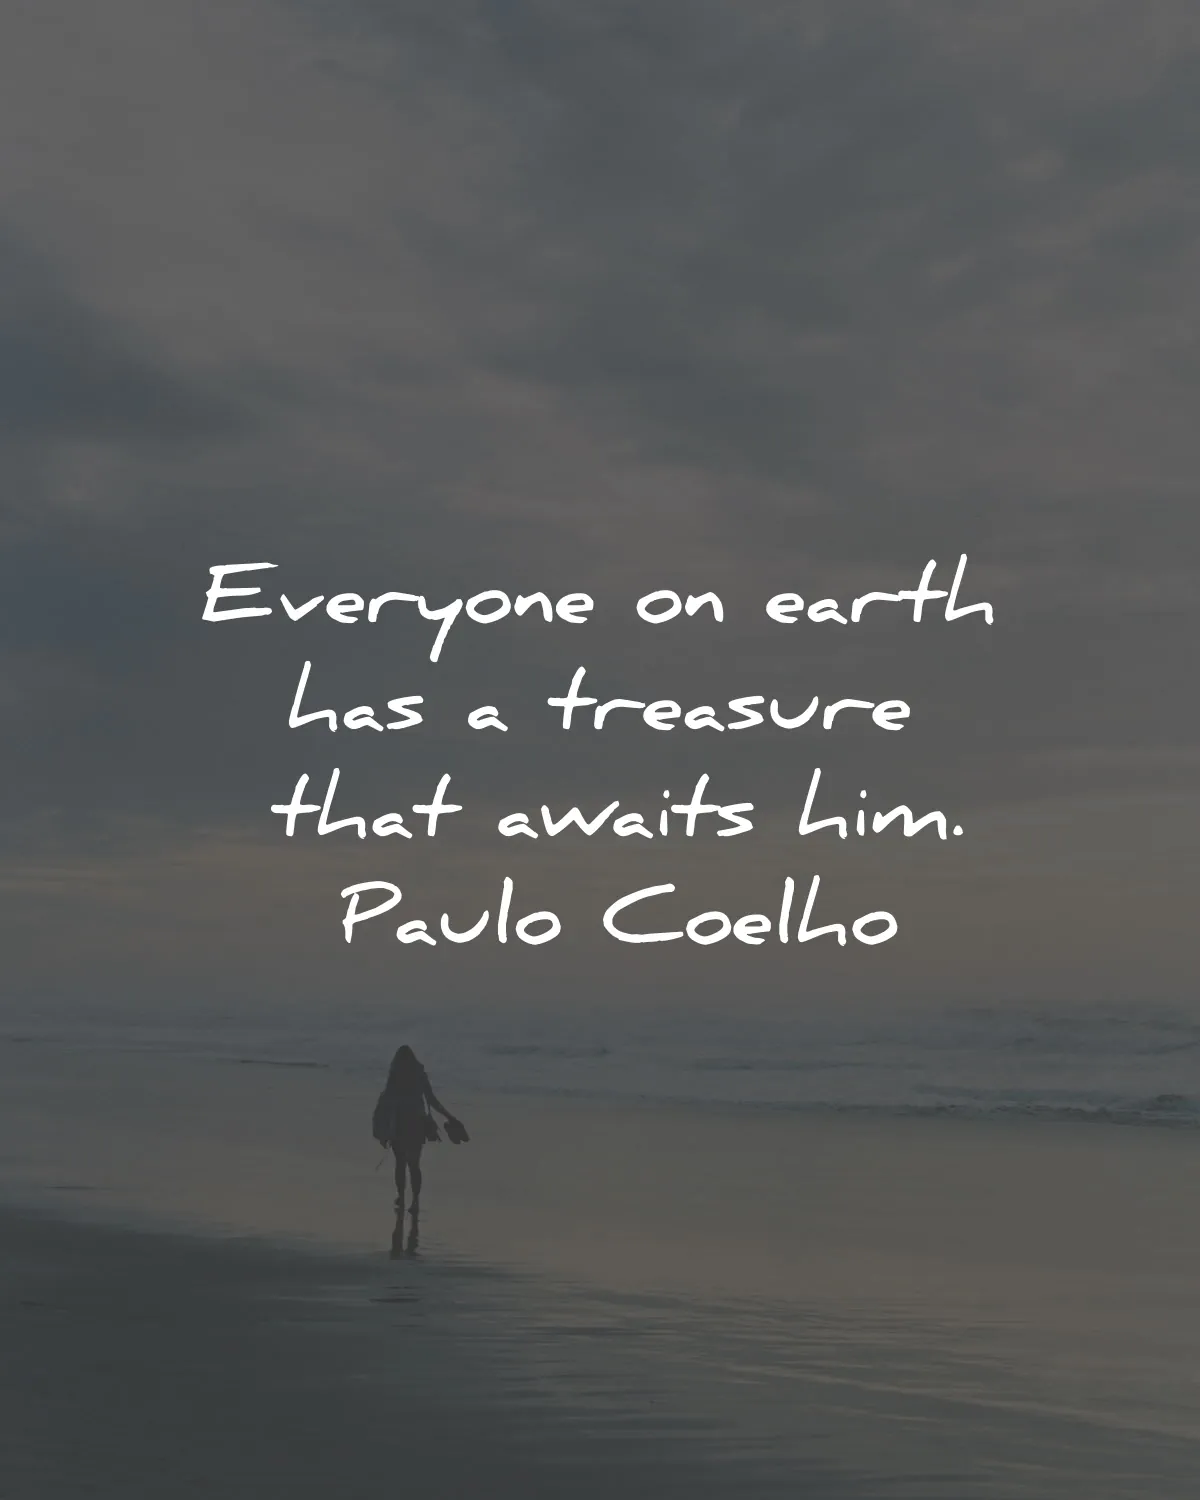 the alchemist quotes paulo coelho everyone earth treasure awaits wisdom